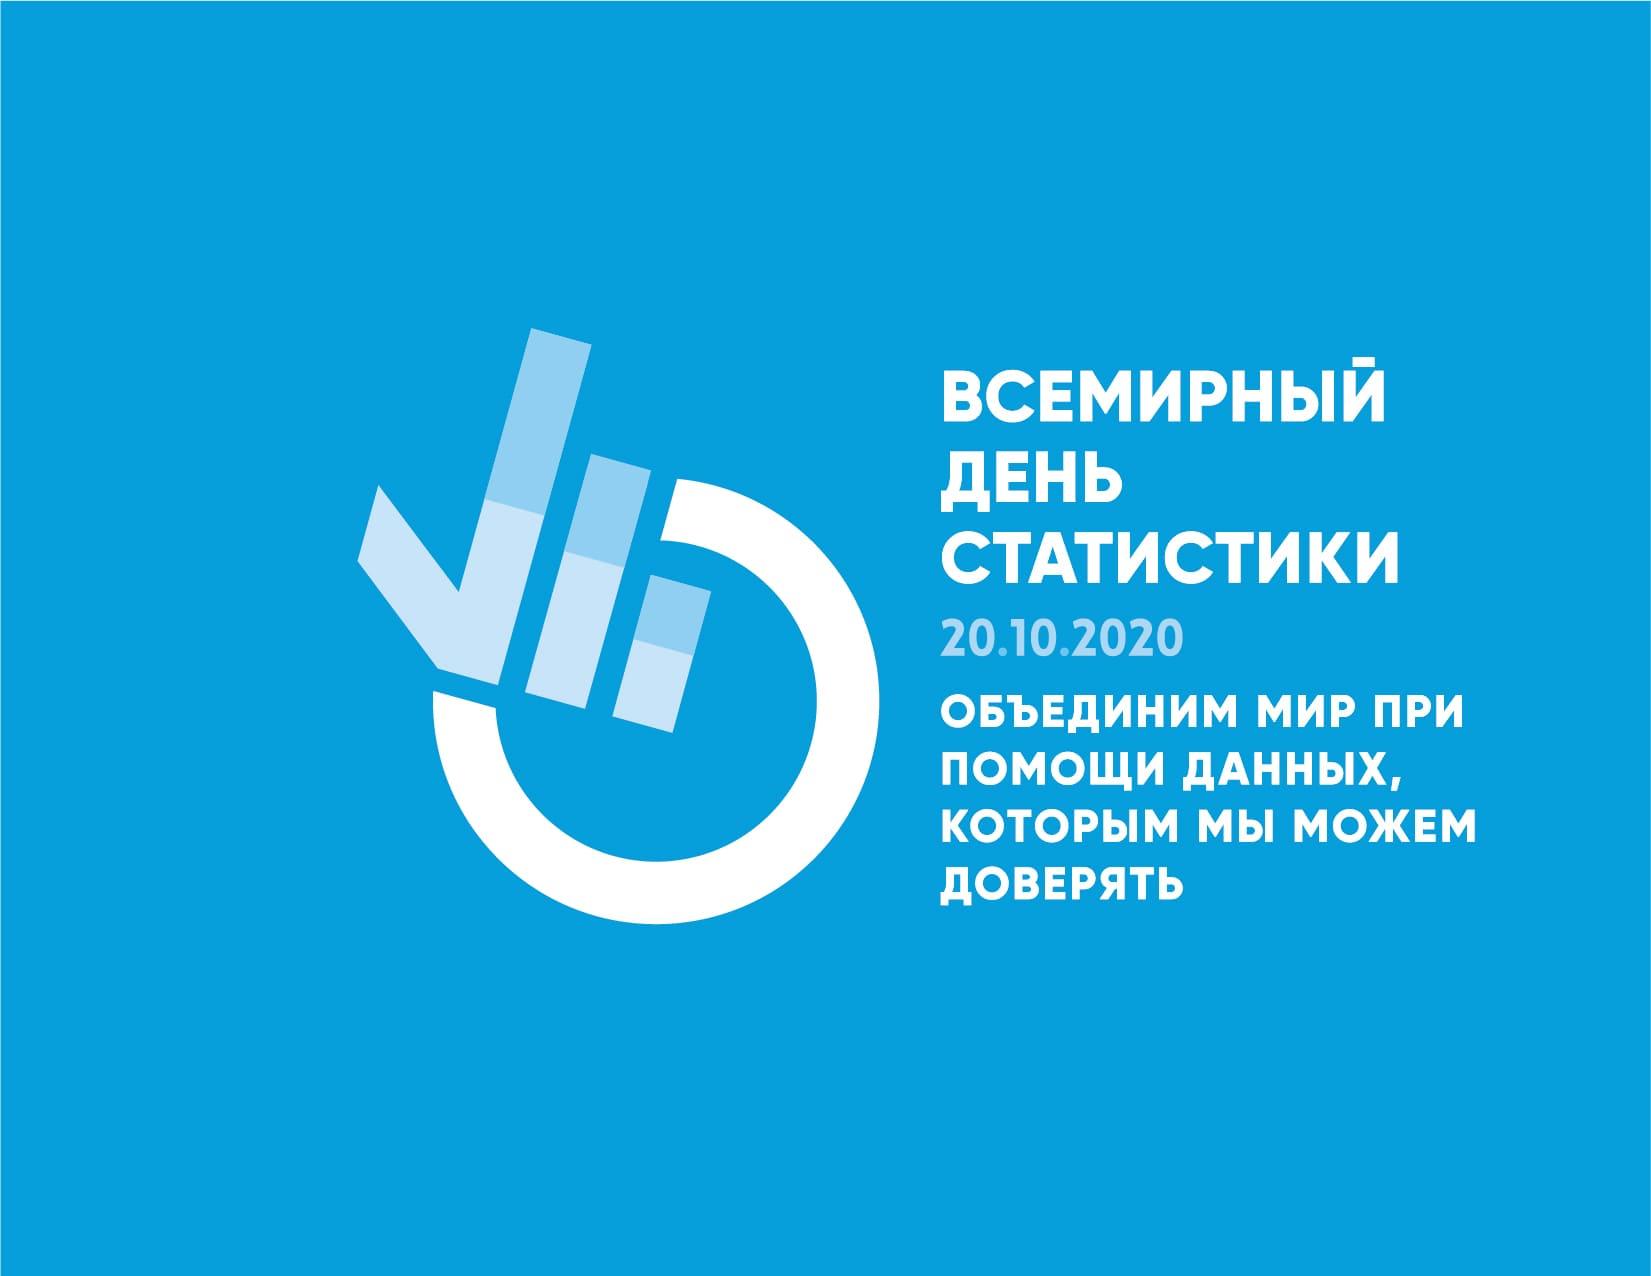 world statistics day 2020 logo